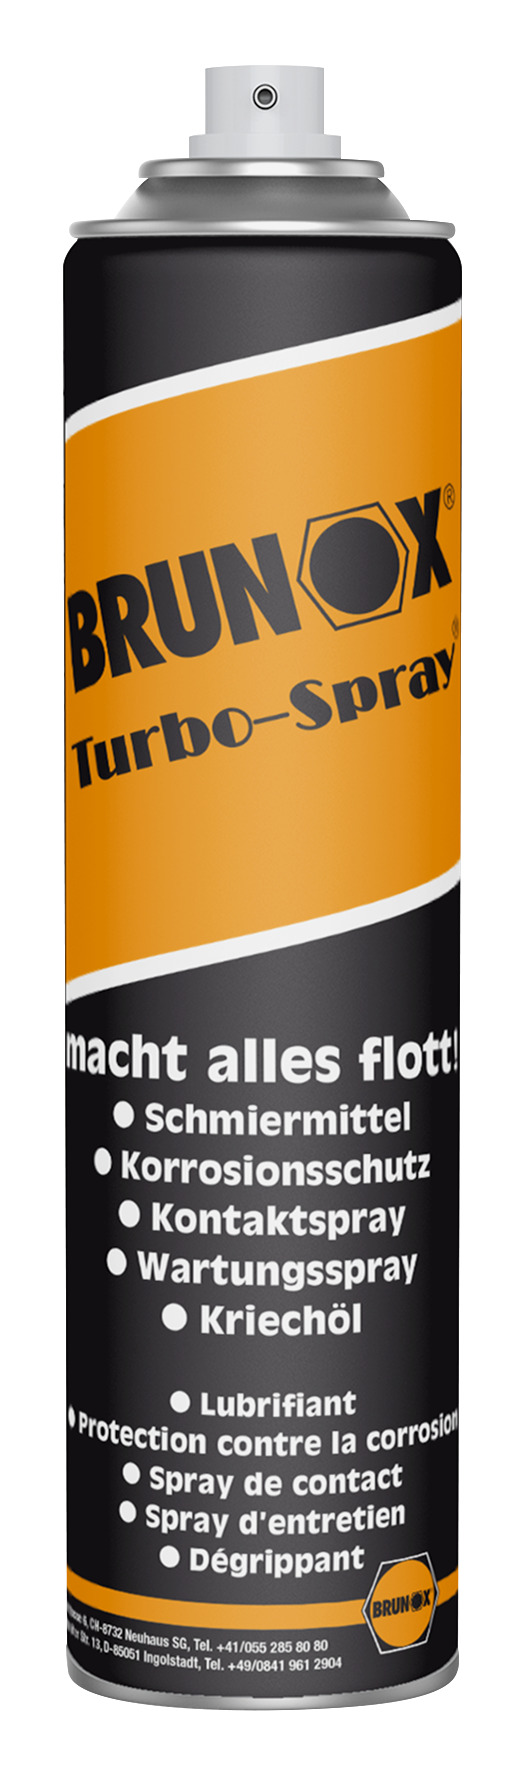 Turbospray Brunox